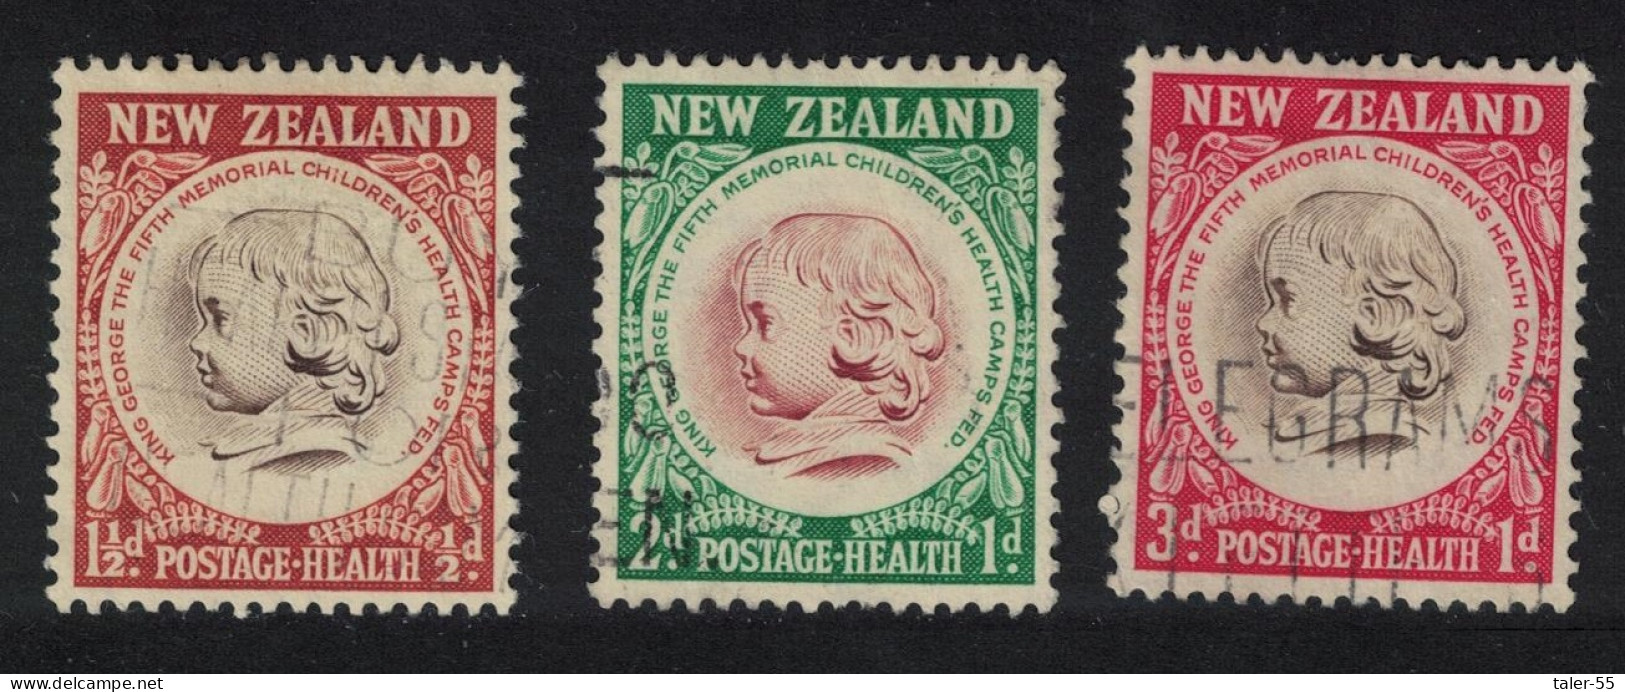 New Zealand Health Camps Federation Emblem 3v 1955 Canc SG#742-744 - Gebraucht